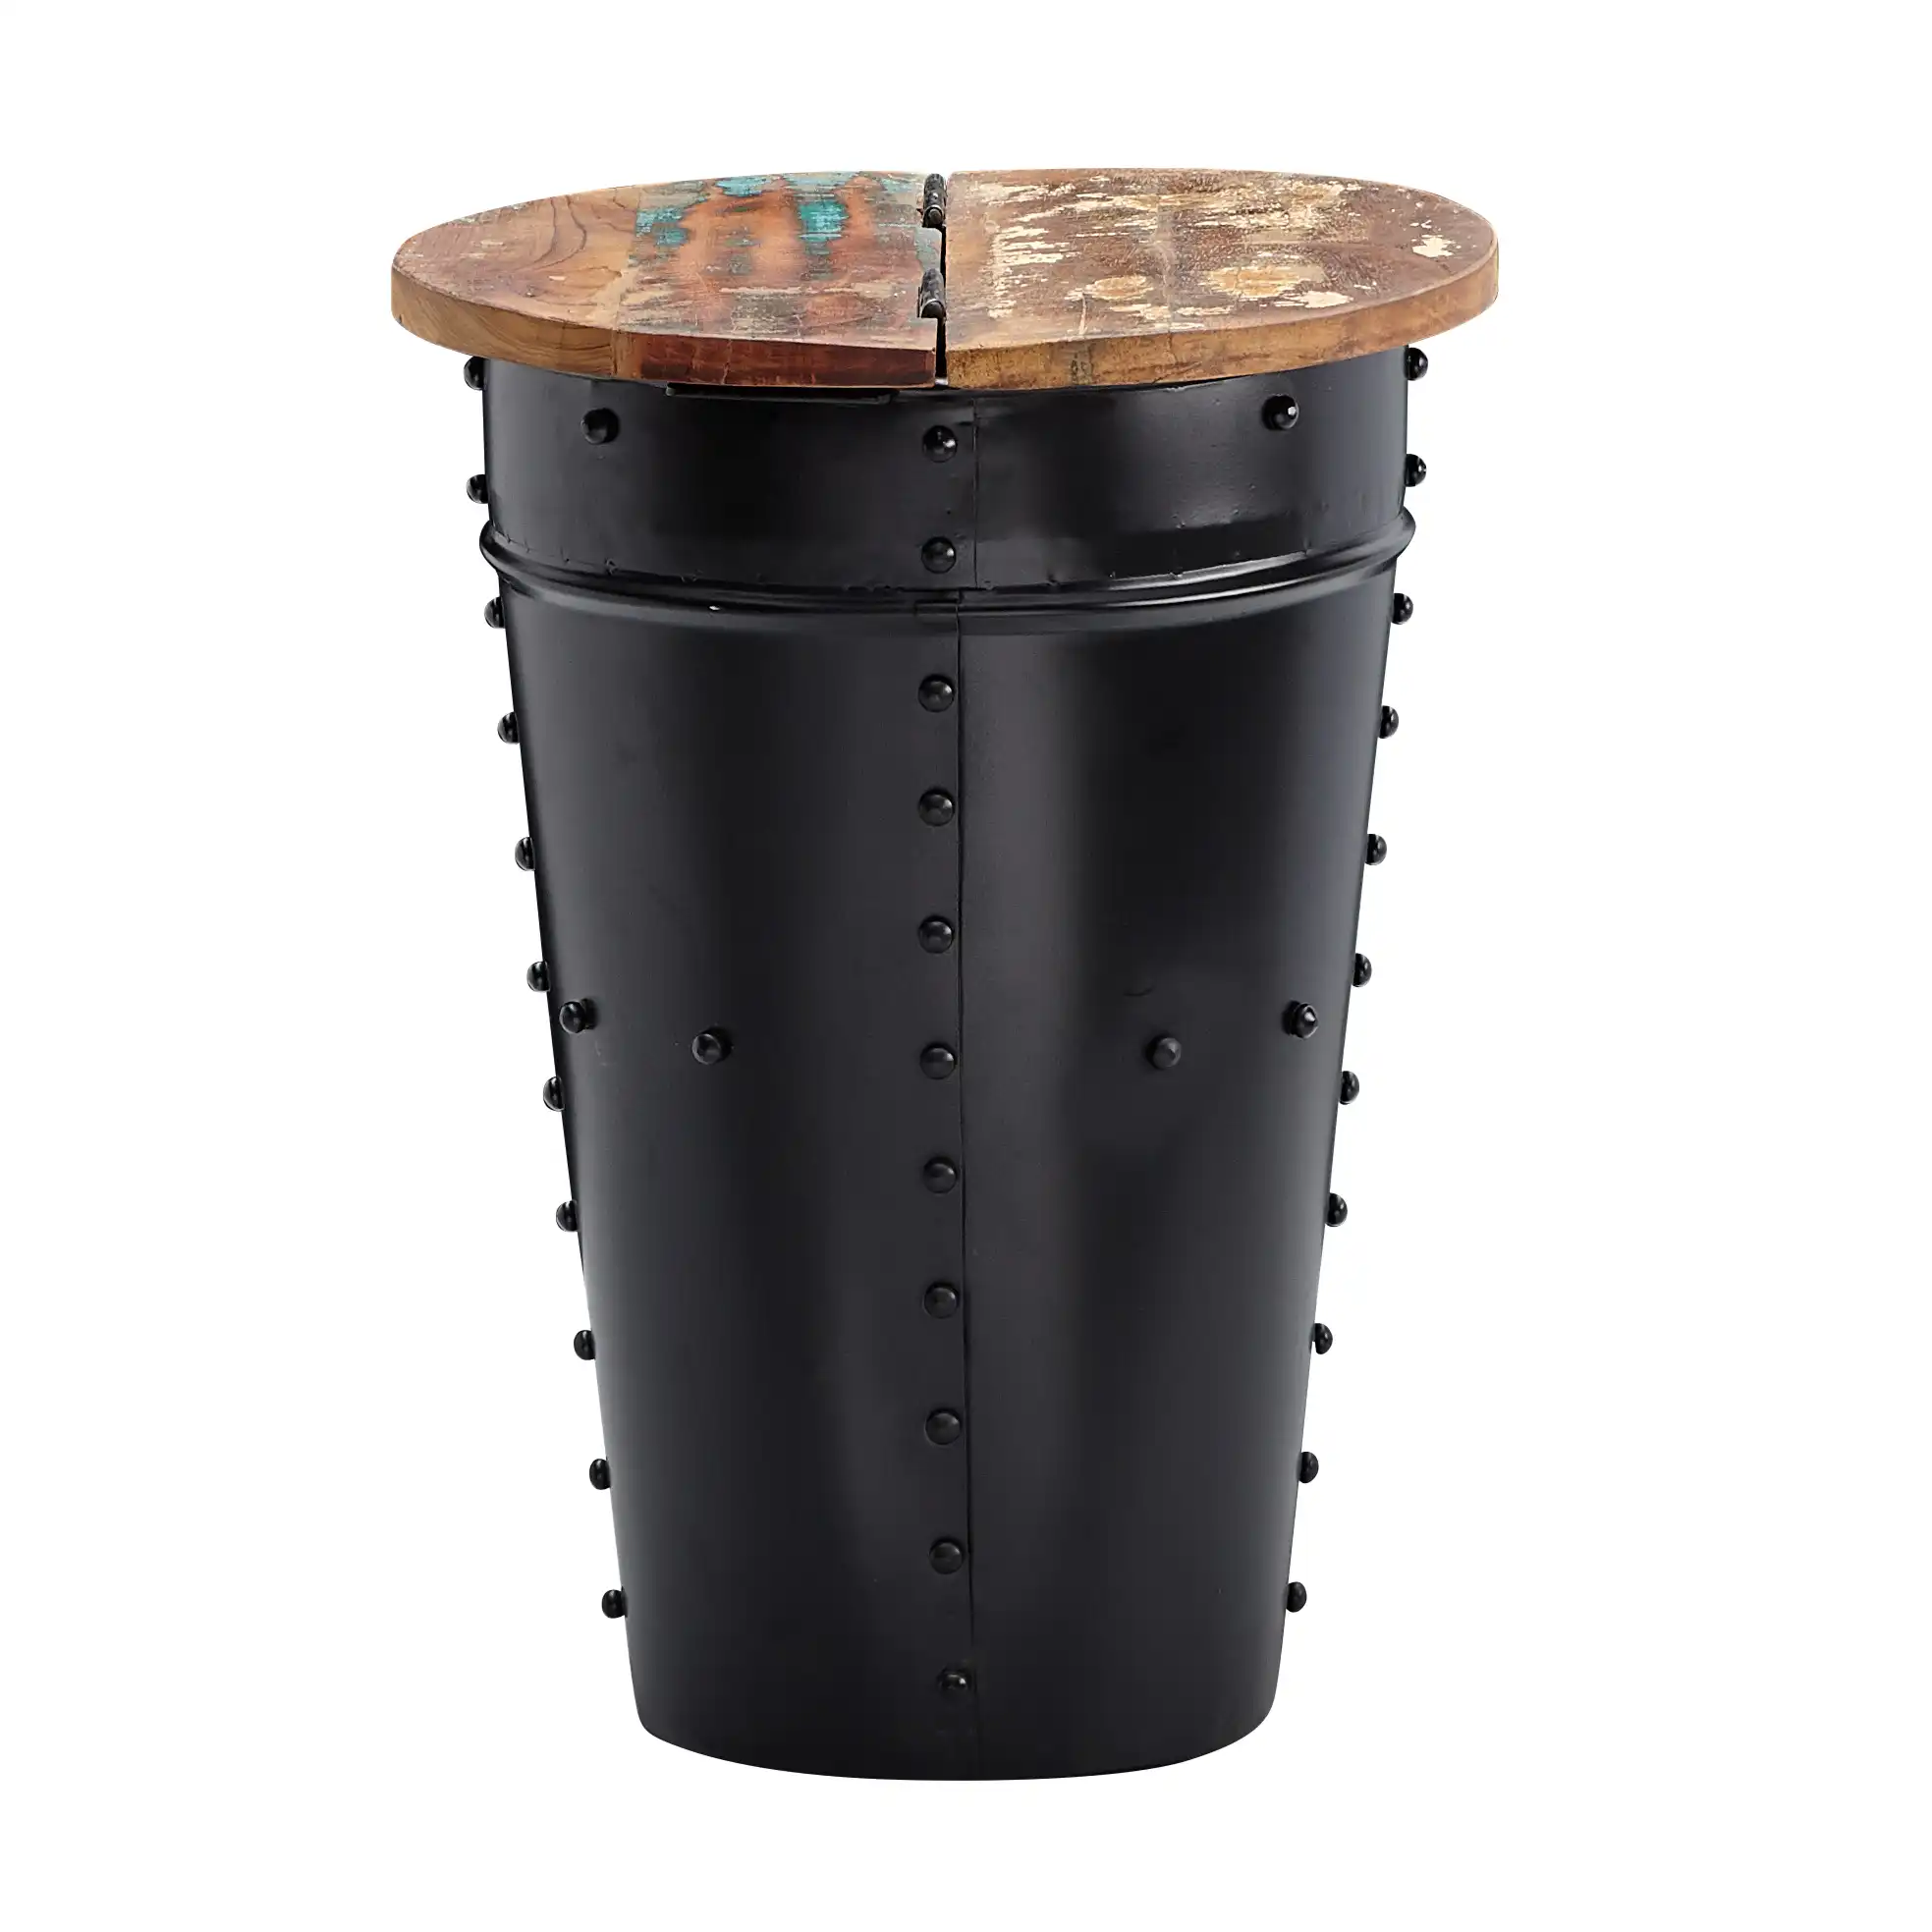 Iron Round Coffee Table with Wooden Top & Storage Black - popular handicrafts